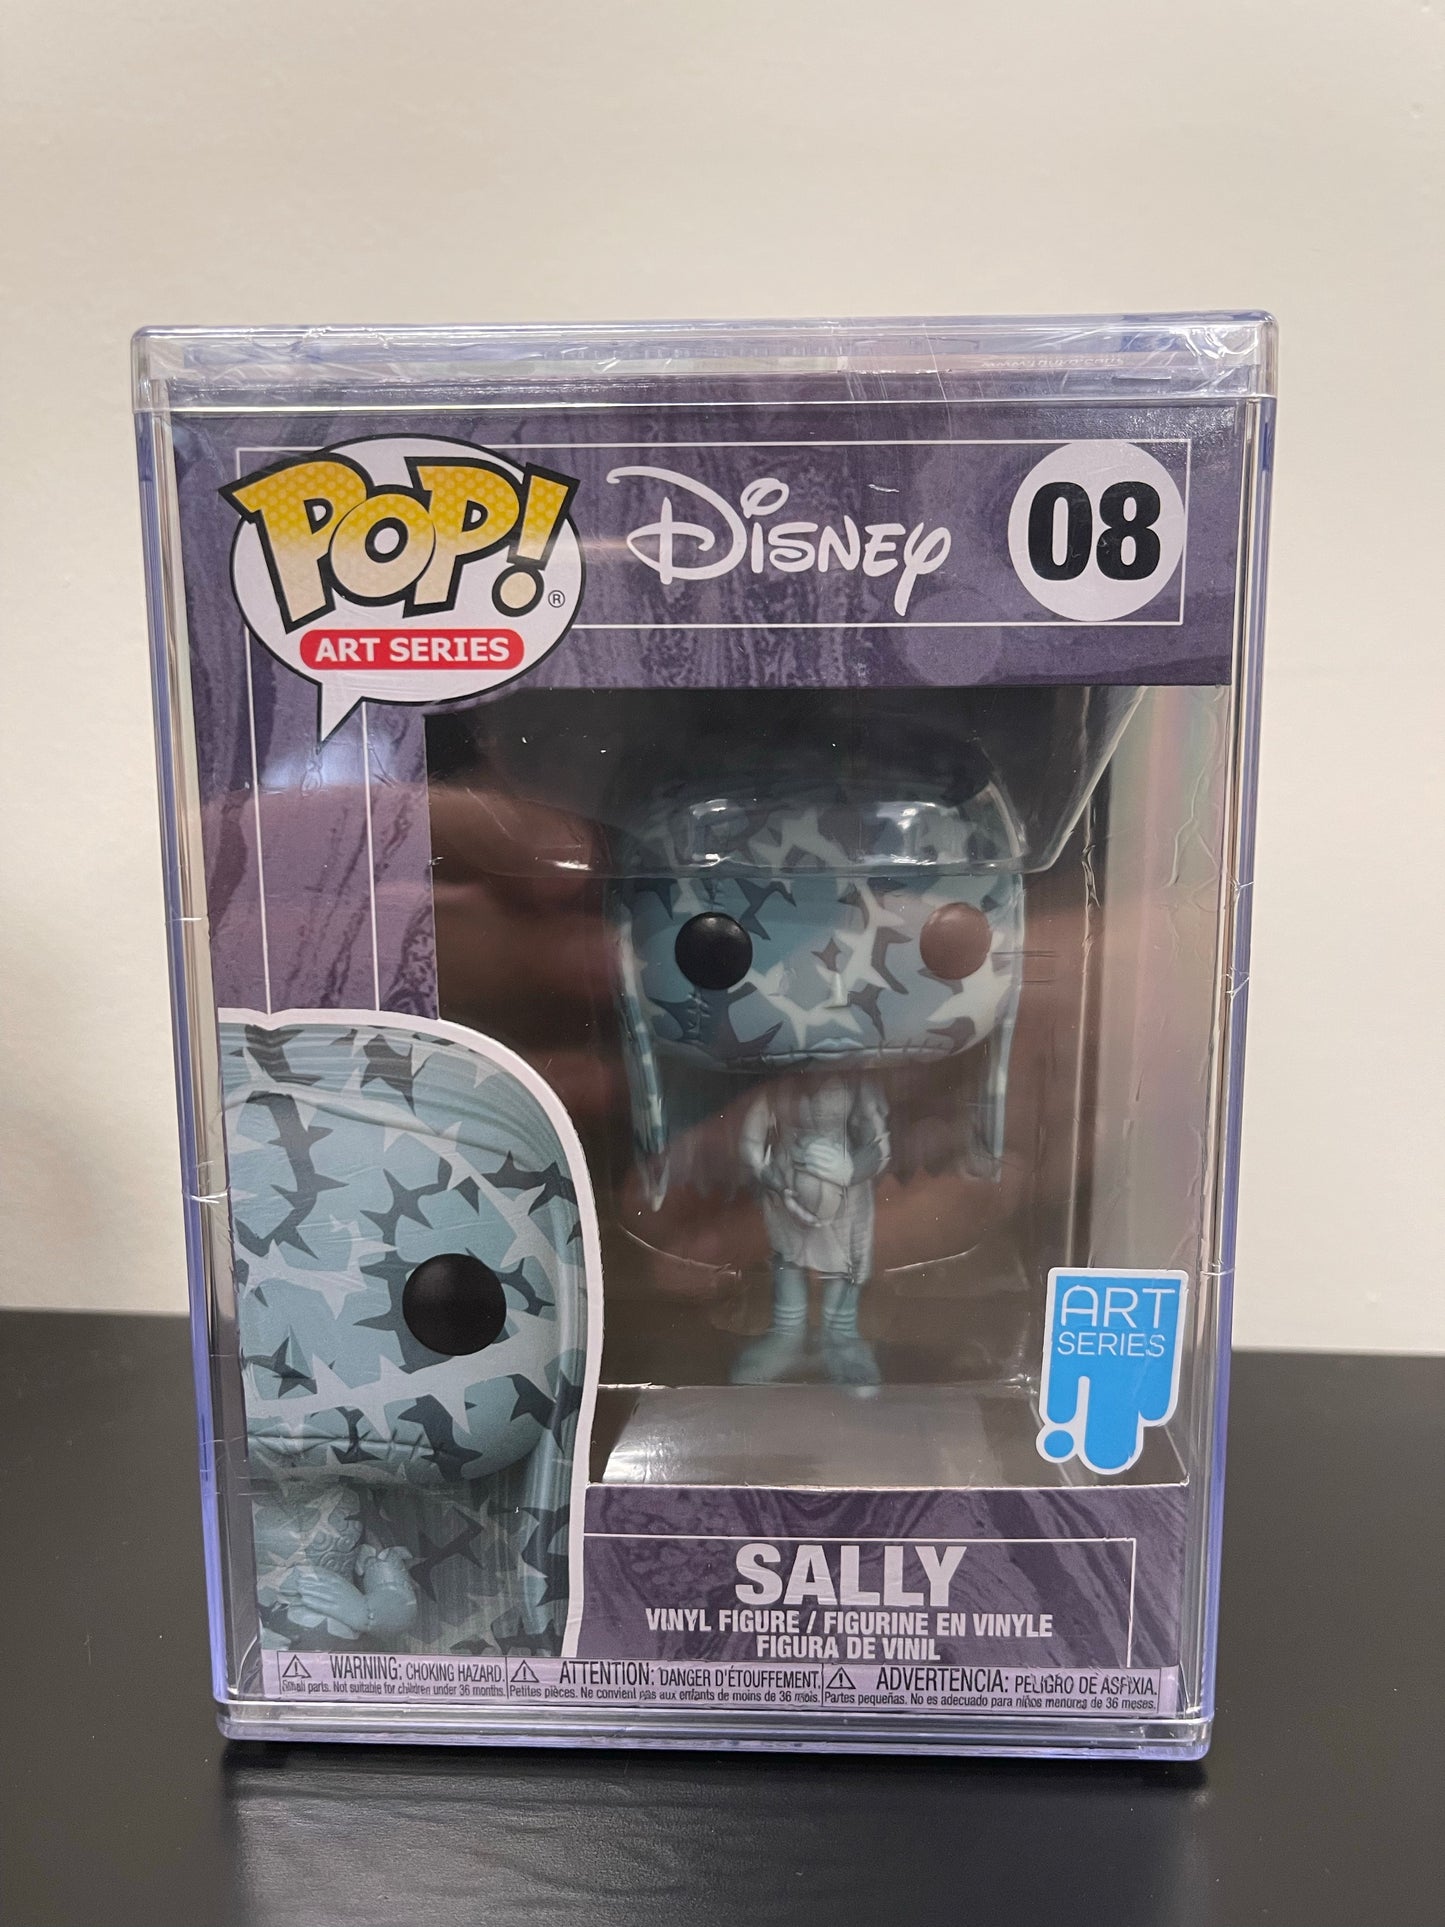 POP! Disney NBC Art Series Sally #08